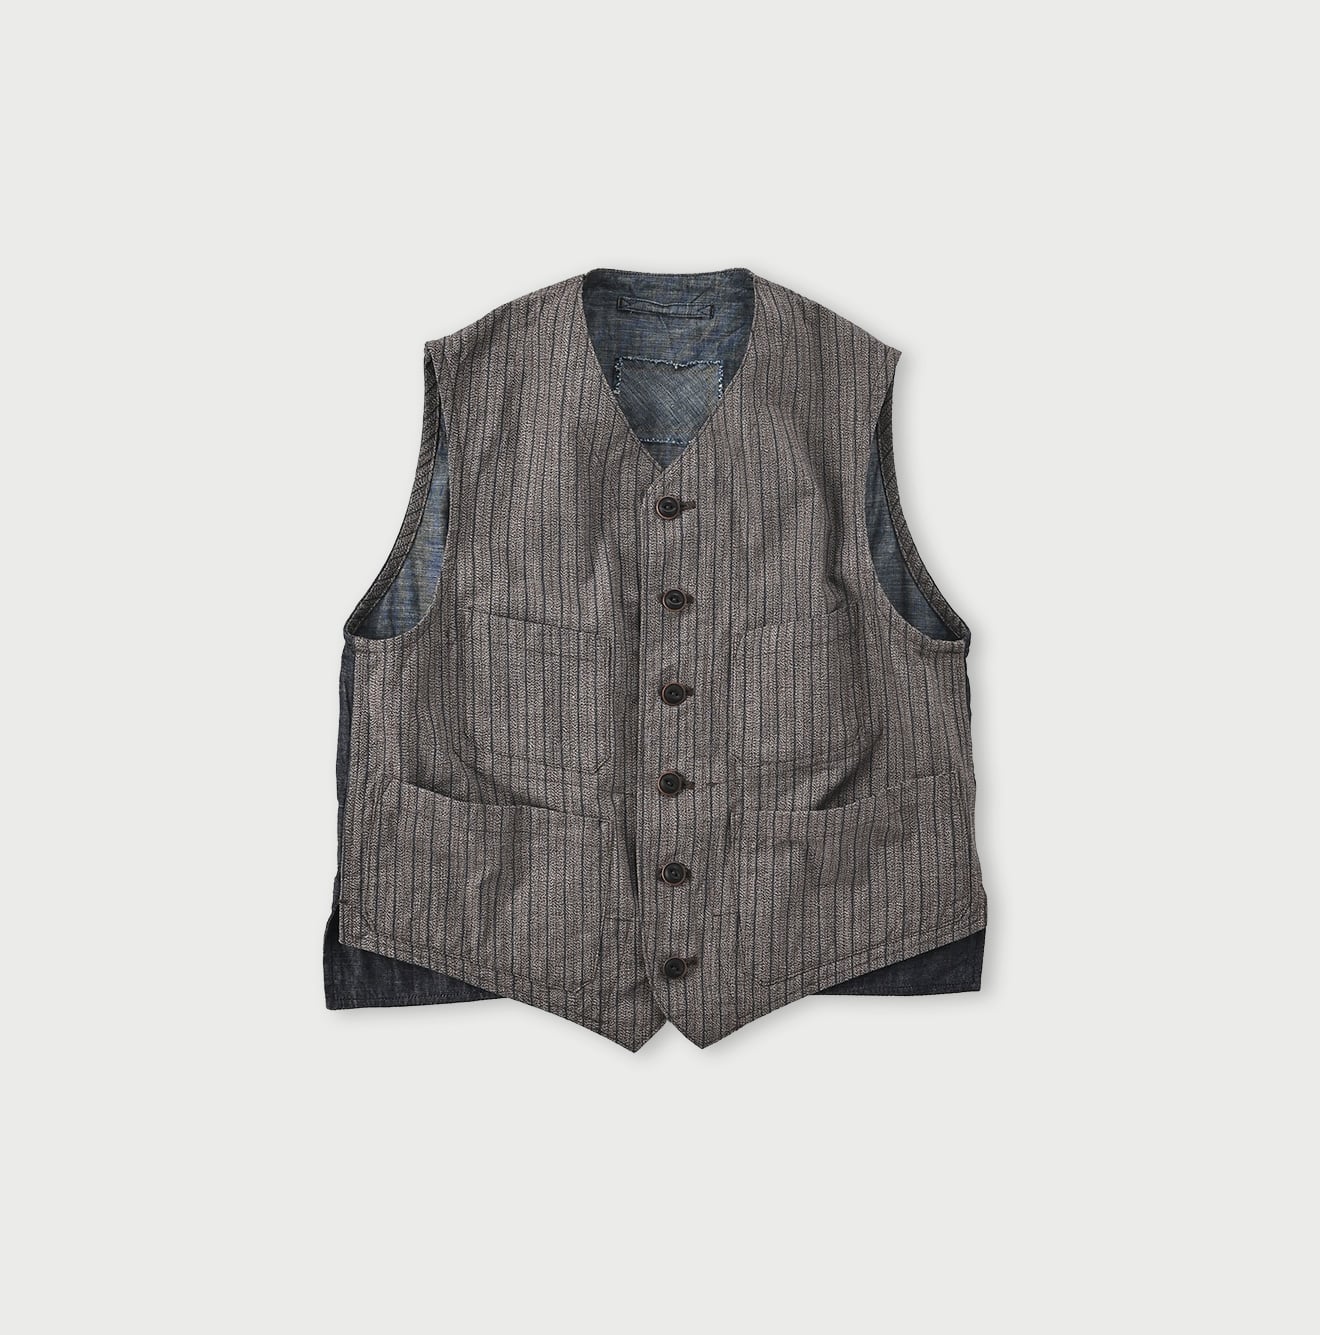 Yorimoku Cotton Tweed 908 4pocket Vest